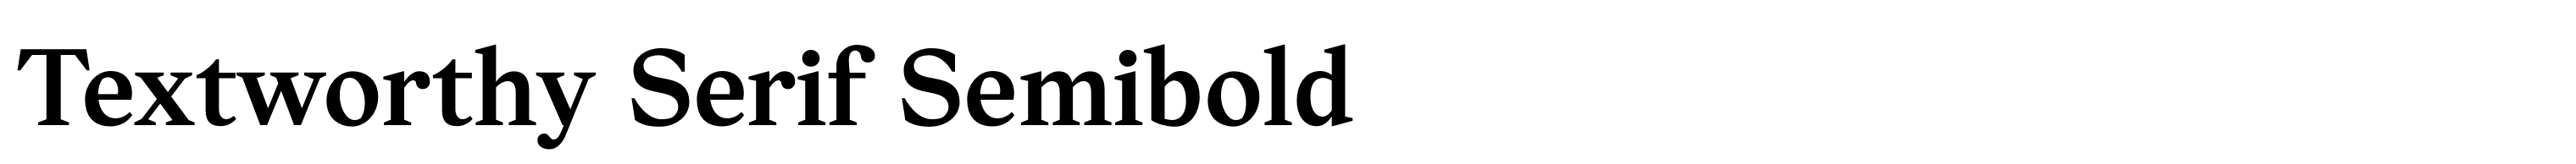 Textworthy Serif Semibold